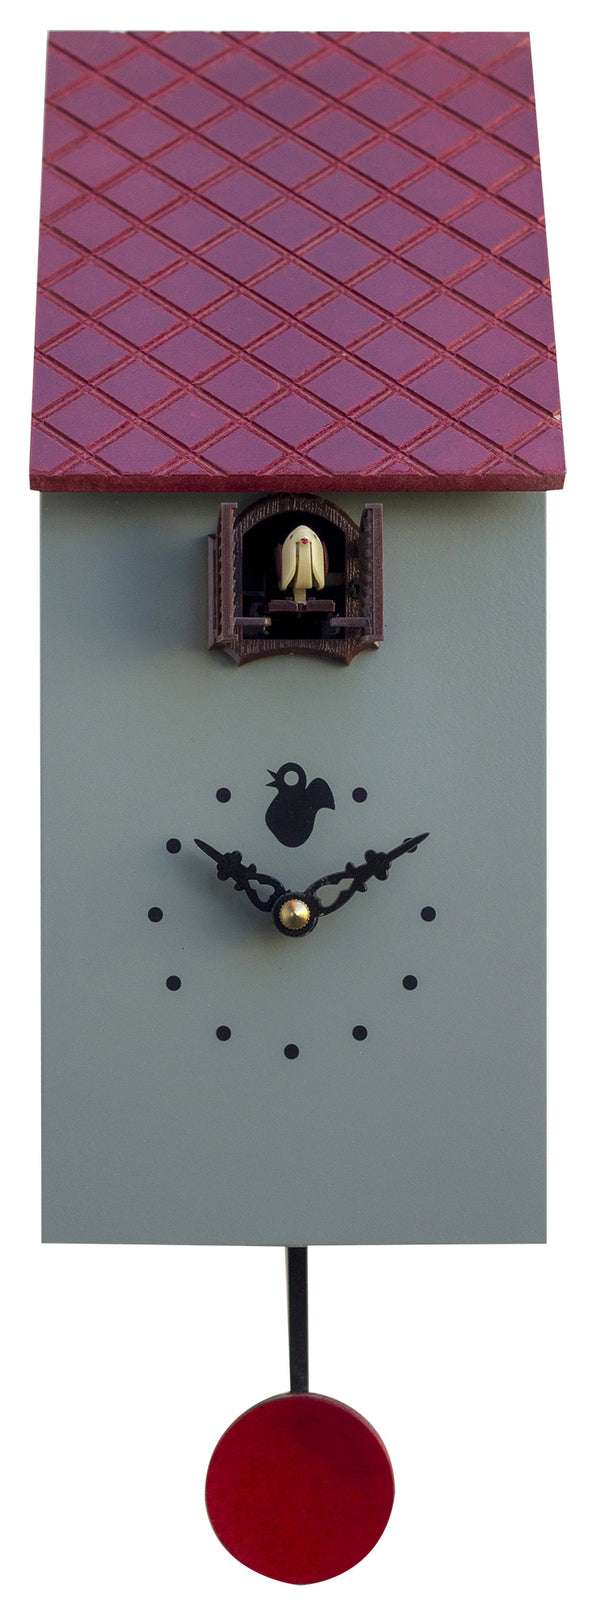 prezzo Horloge Coucou Murale 13x30x12 cm Pirondini Italia Portofino Ciment Gris